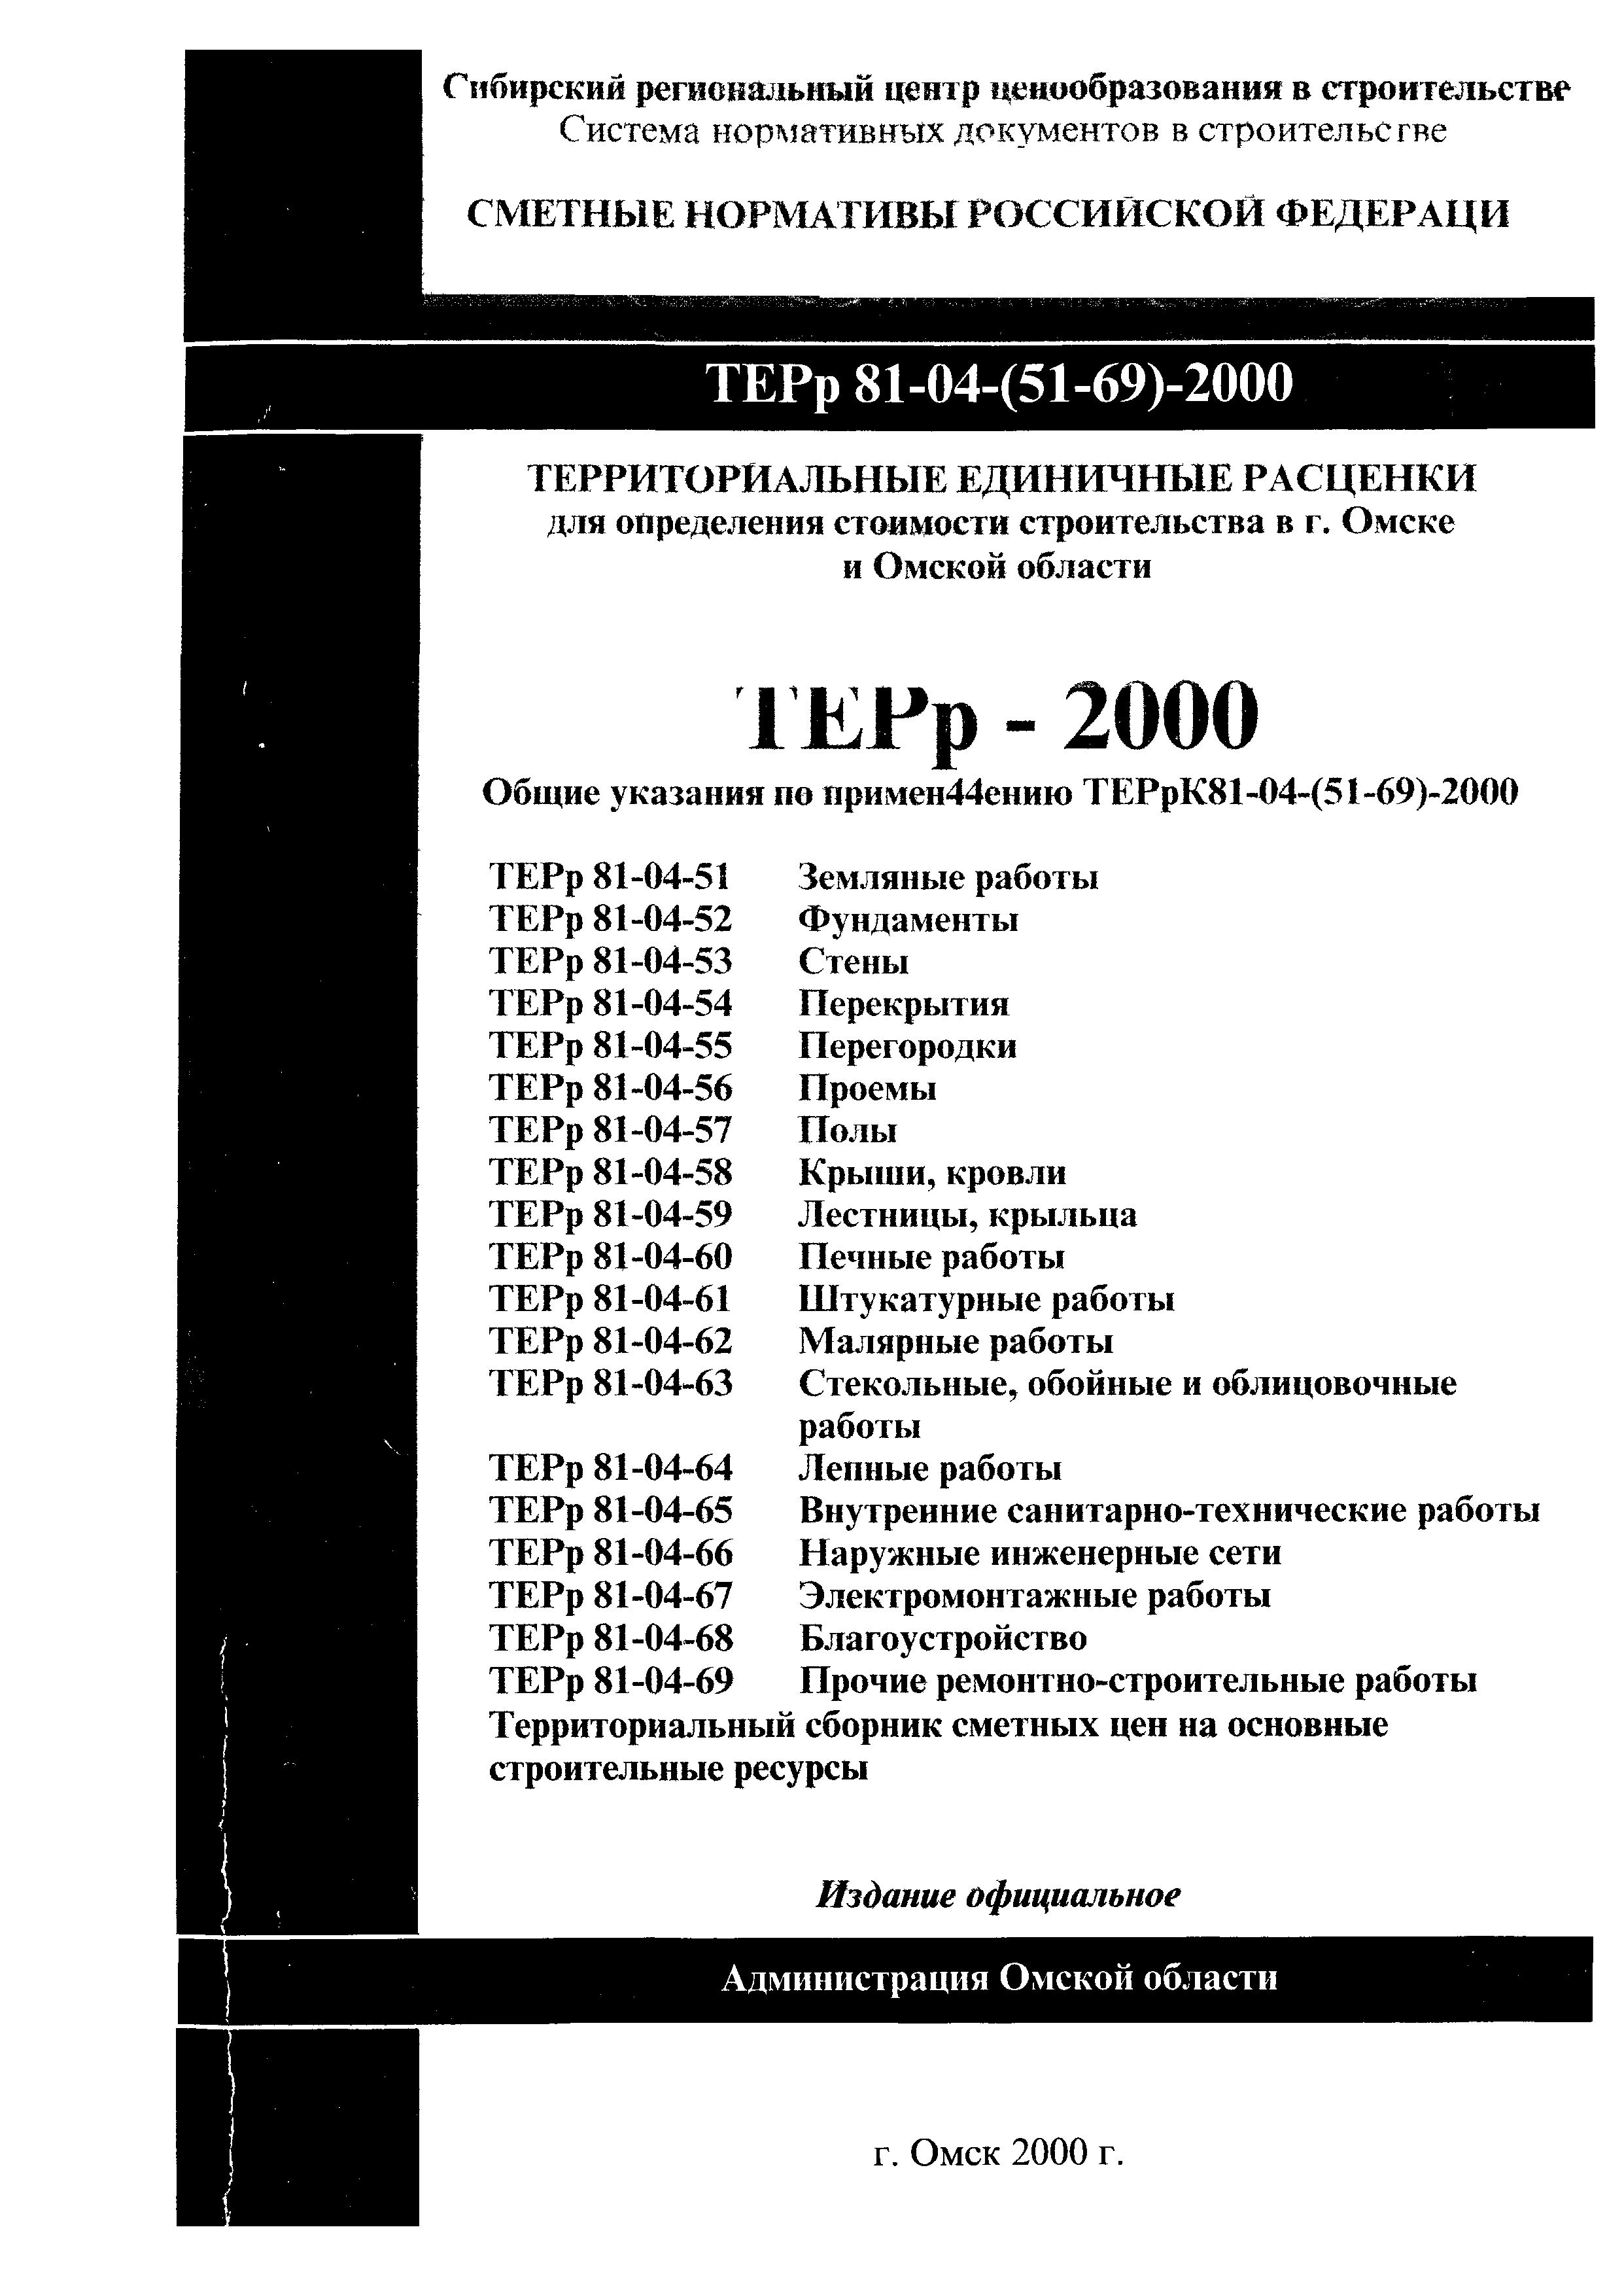 ТЕРр Омской области 2000-66